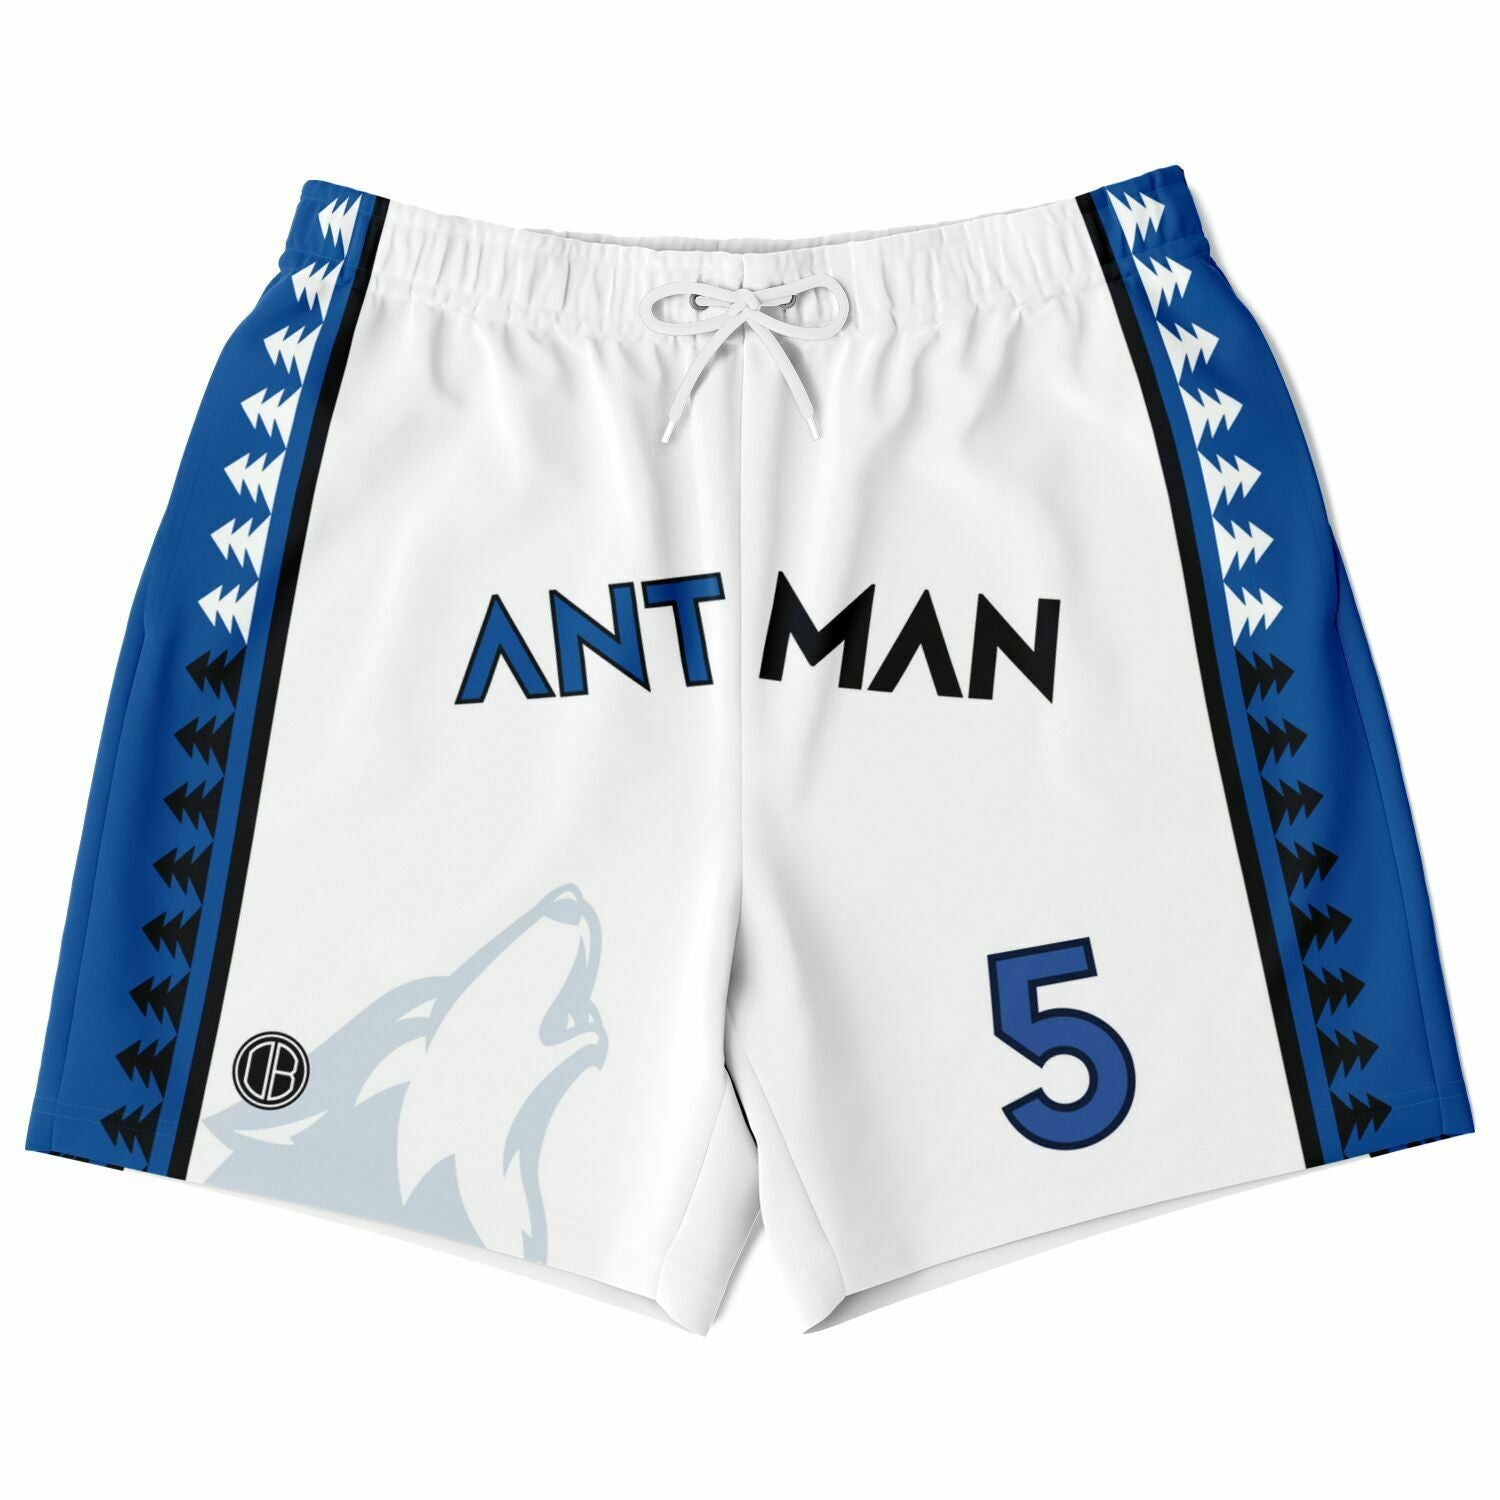 DearBBall Fashion Short - Ant-Man White Playoffs Edition